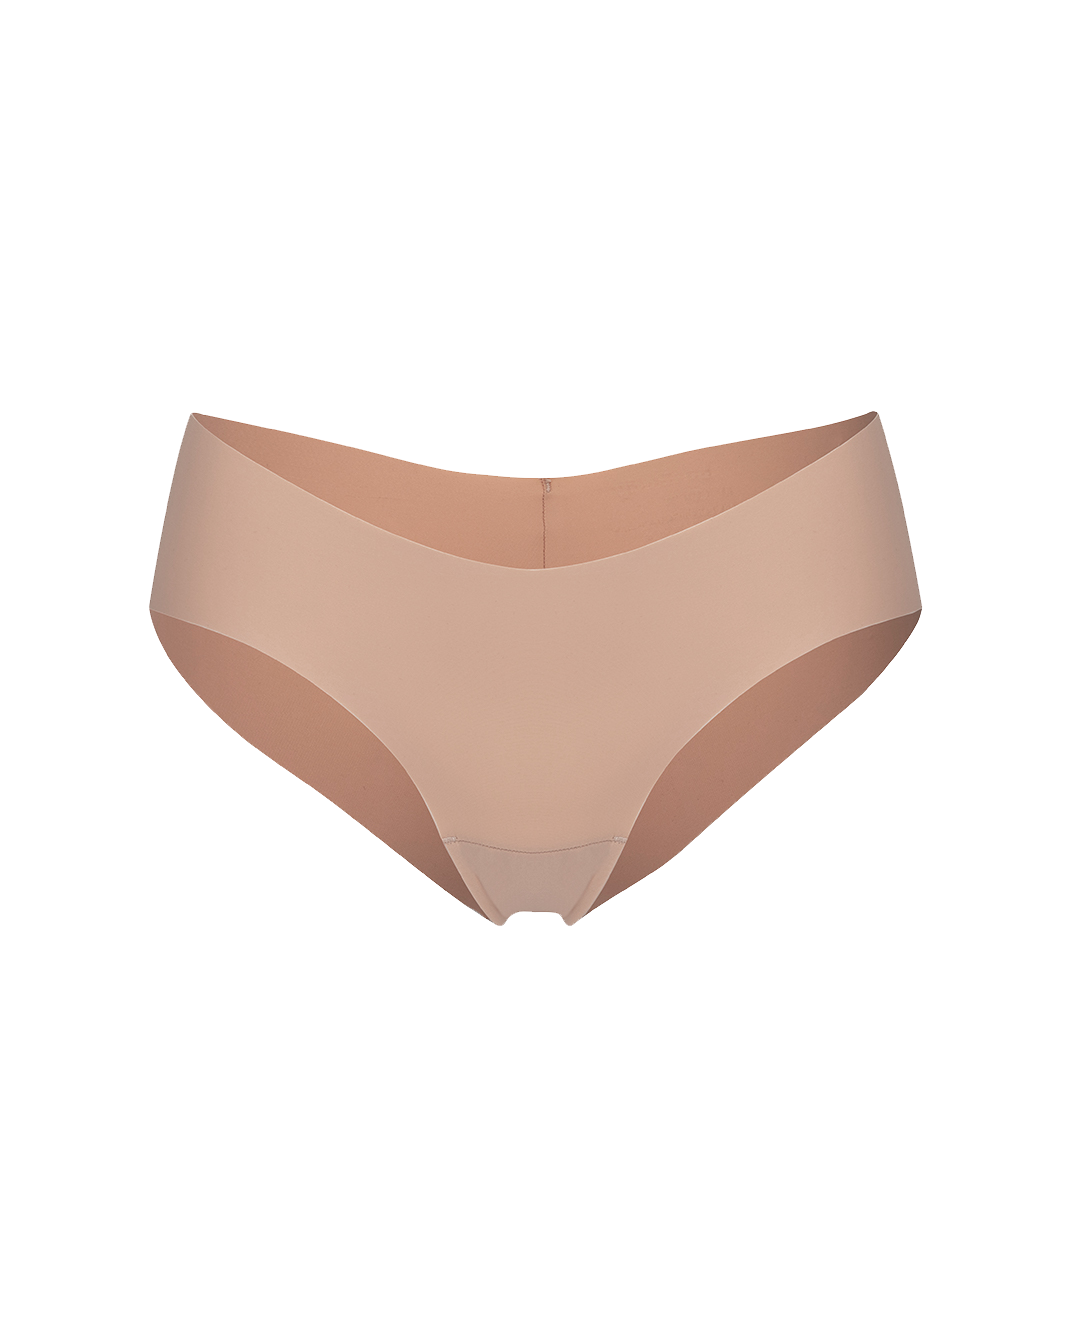 Sofia underwear